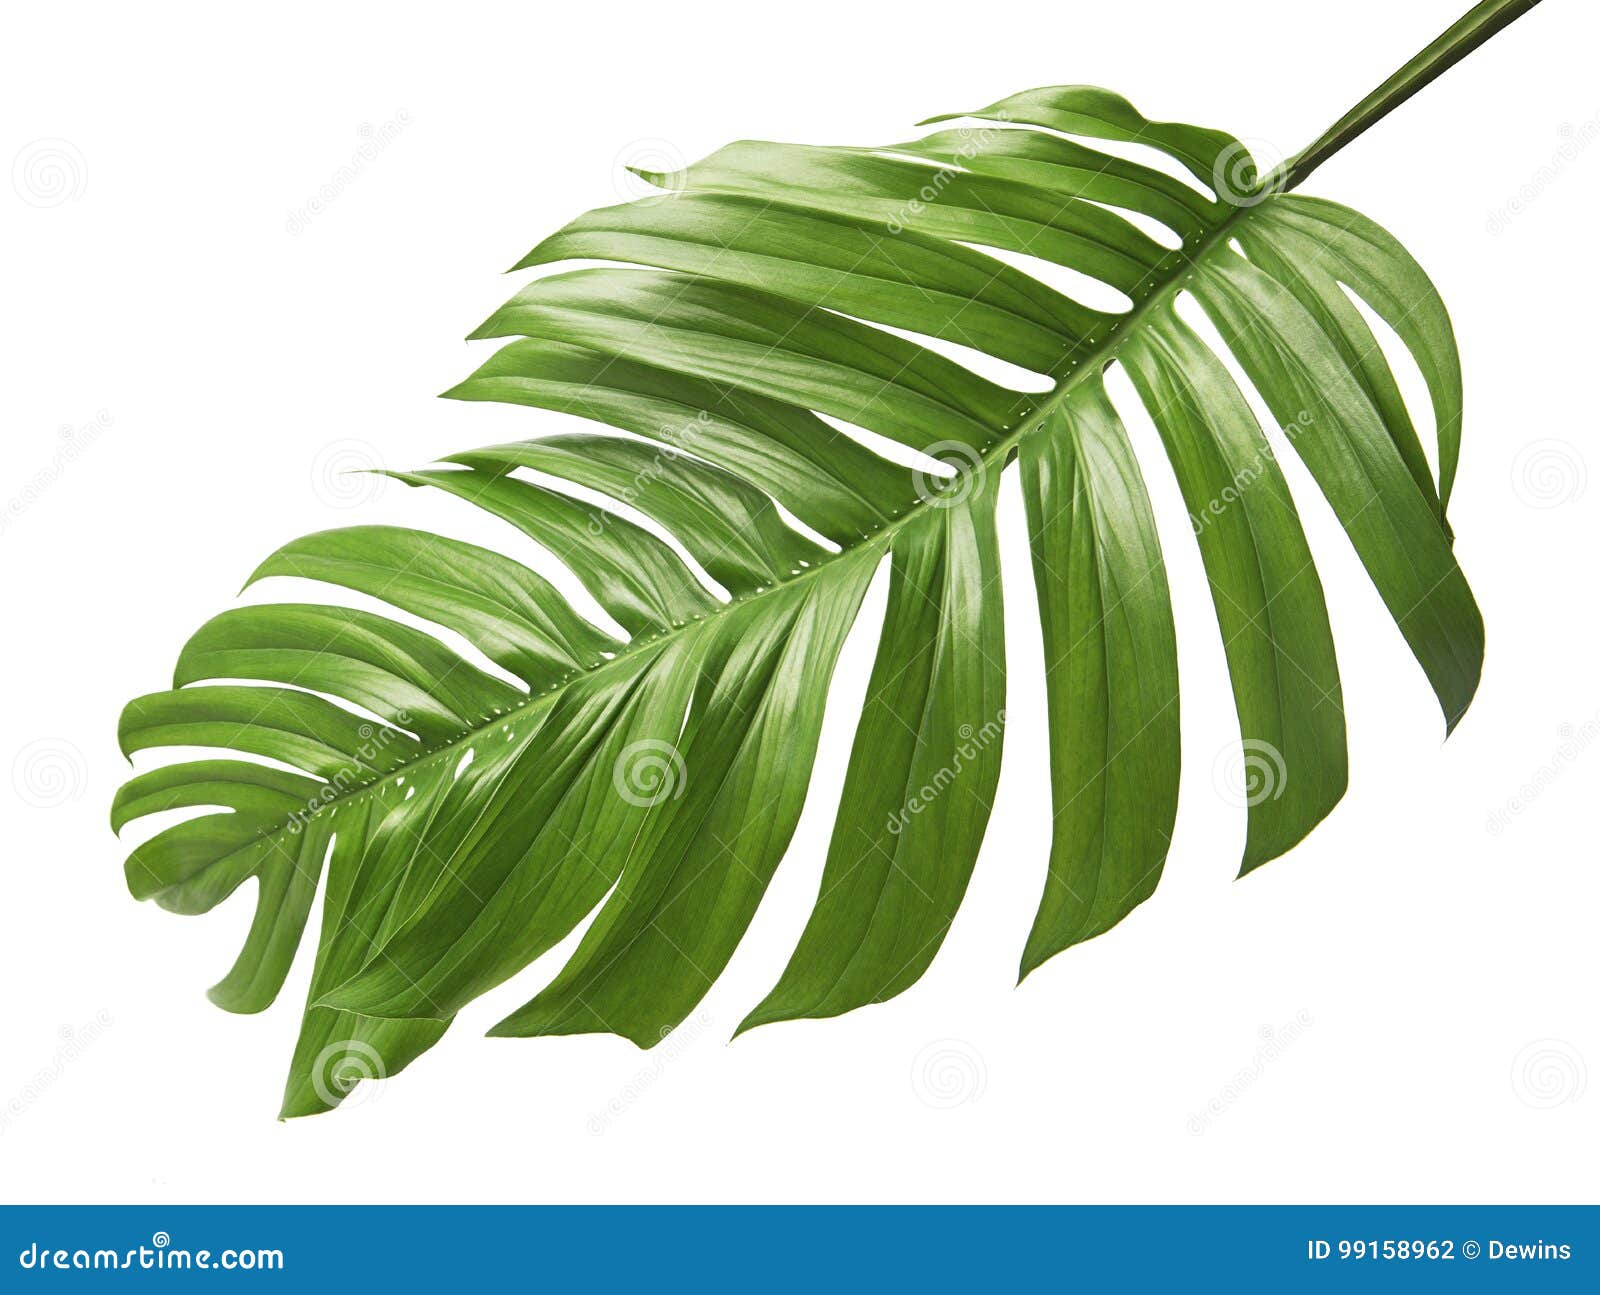 monstera deliciosa leaf  on white background